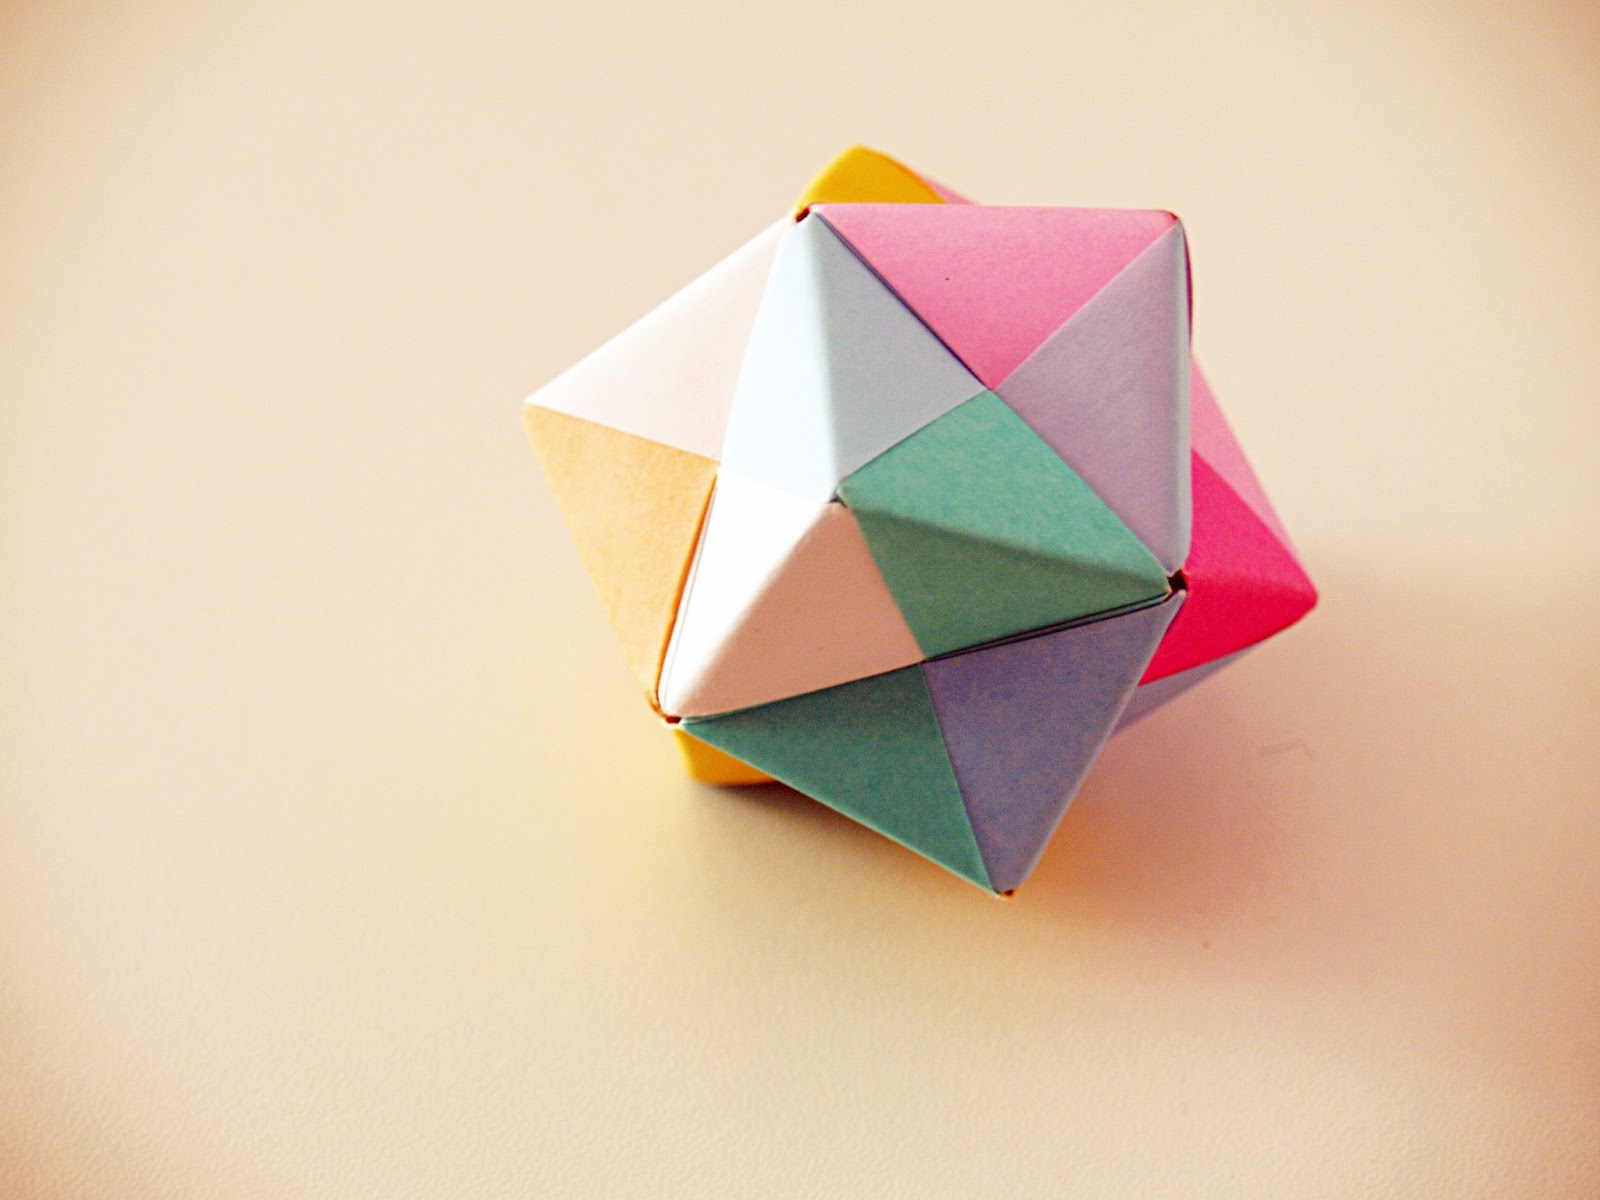 Антистресс из бумаги а4. Октахедрон оригами. Многогранники оригами. Оригами многогранники из бумаги. Октаэдр оригами.